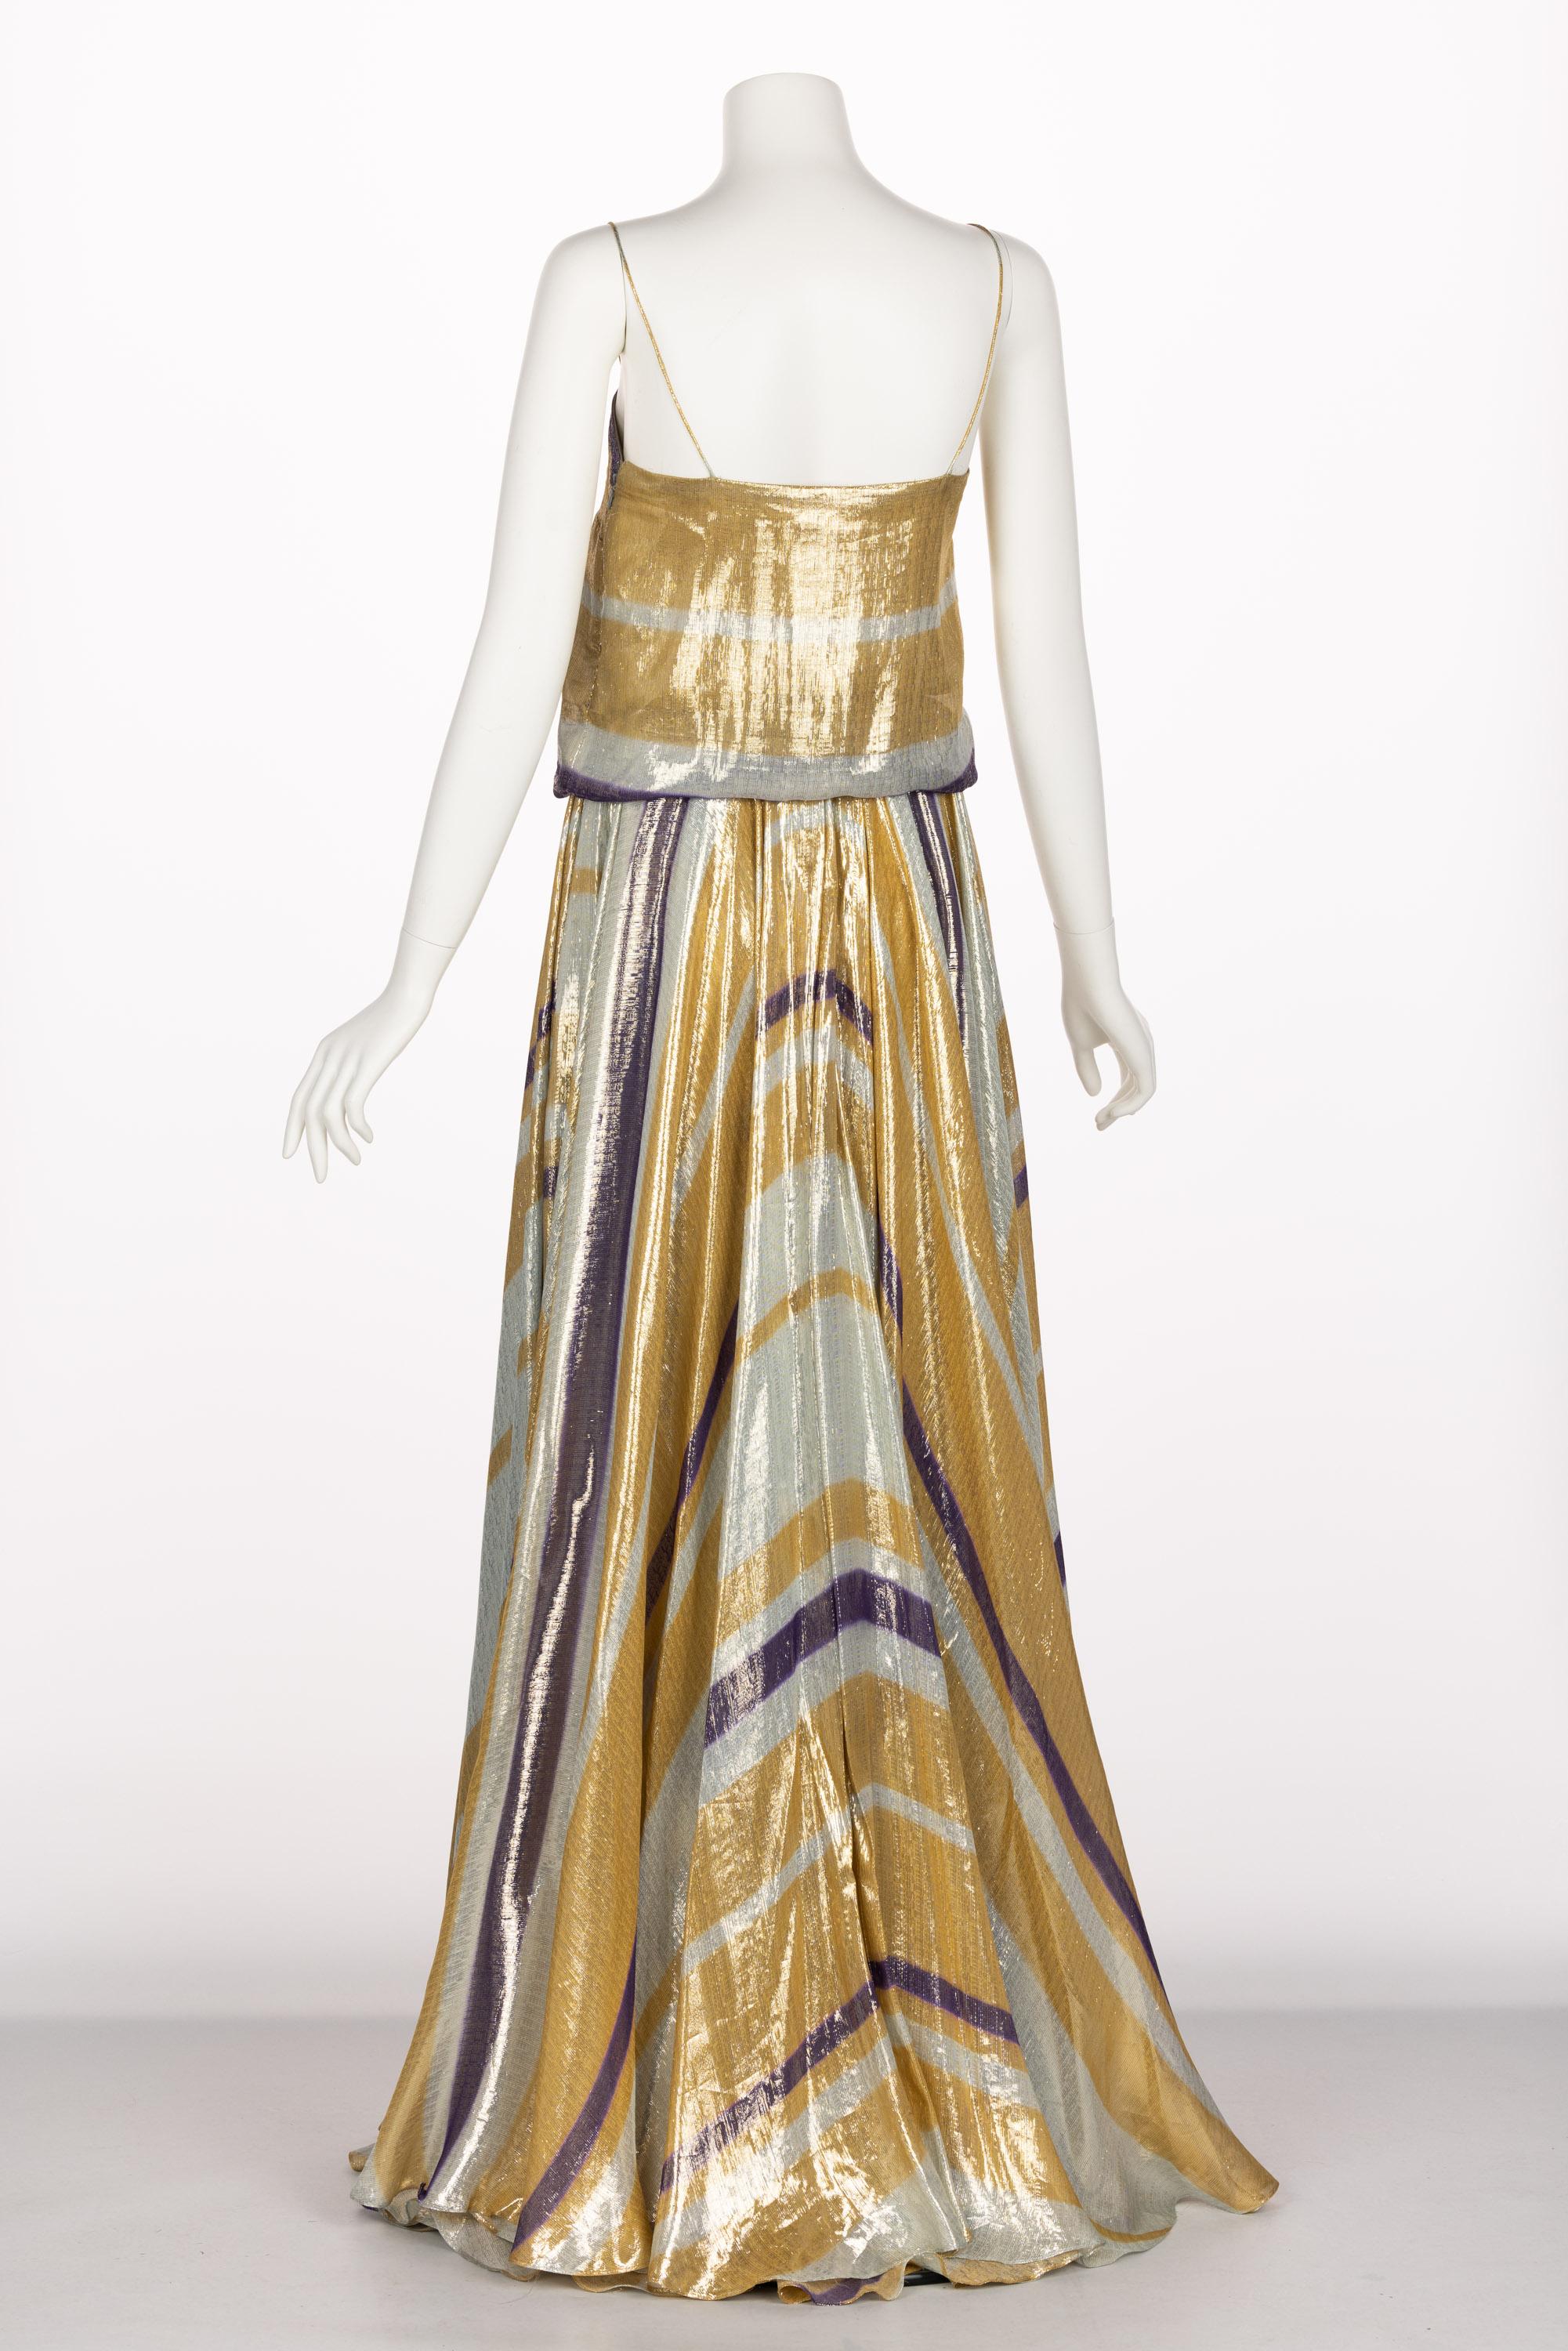 Women's Lanvin Alber Elbaz Resort 2012 Gold & Silver Gown For Sale